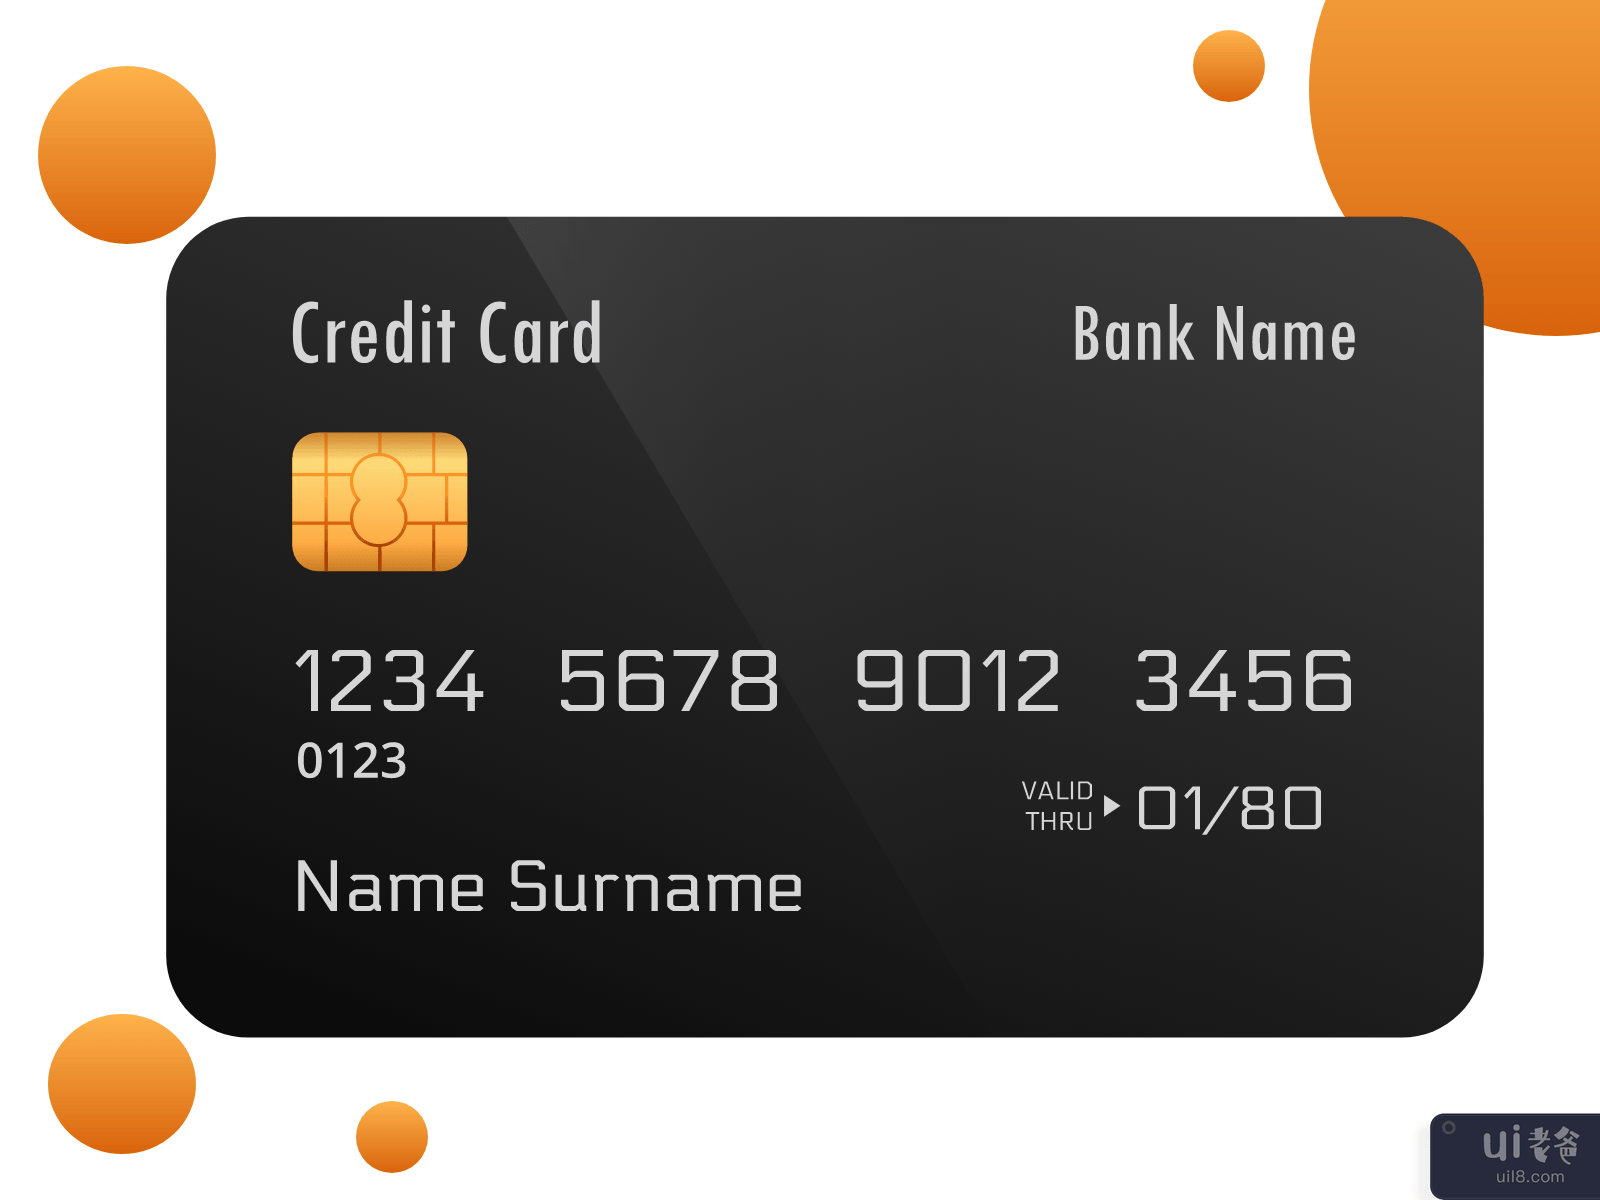 信用卡 - 借记卡 - PayPal 卡 - Visa 卡 - 万事达卡(Credit card - Debit card - PayPal card - Visa card - Master card)插图